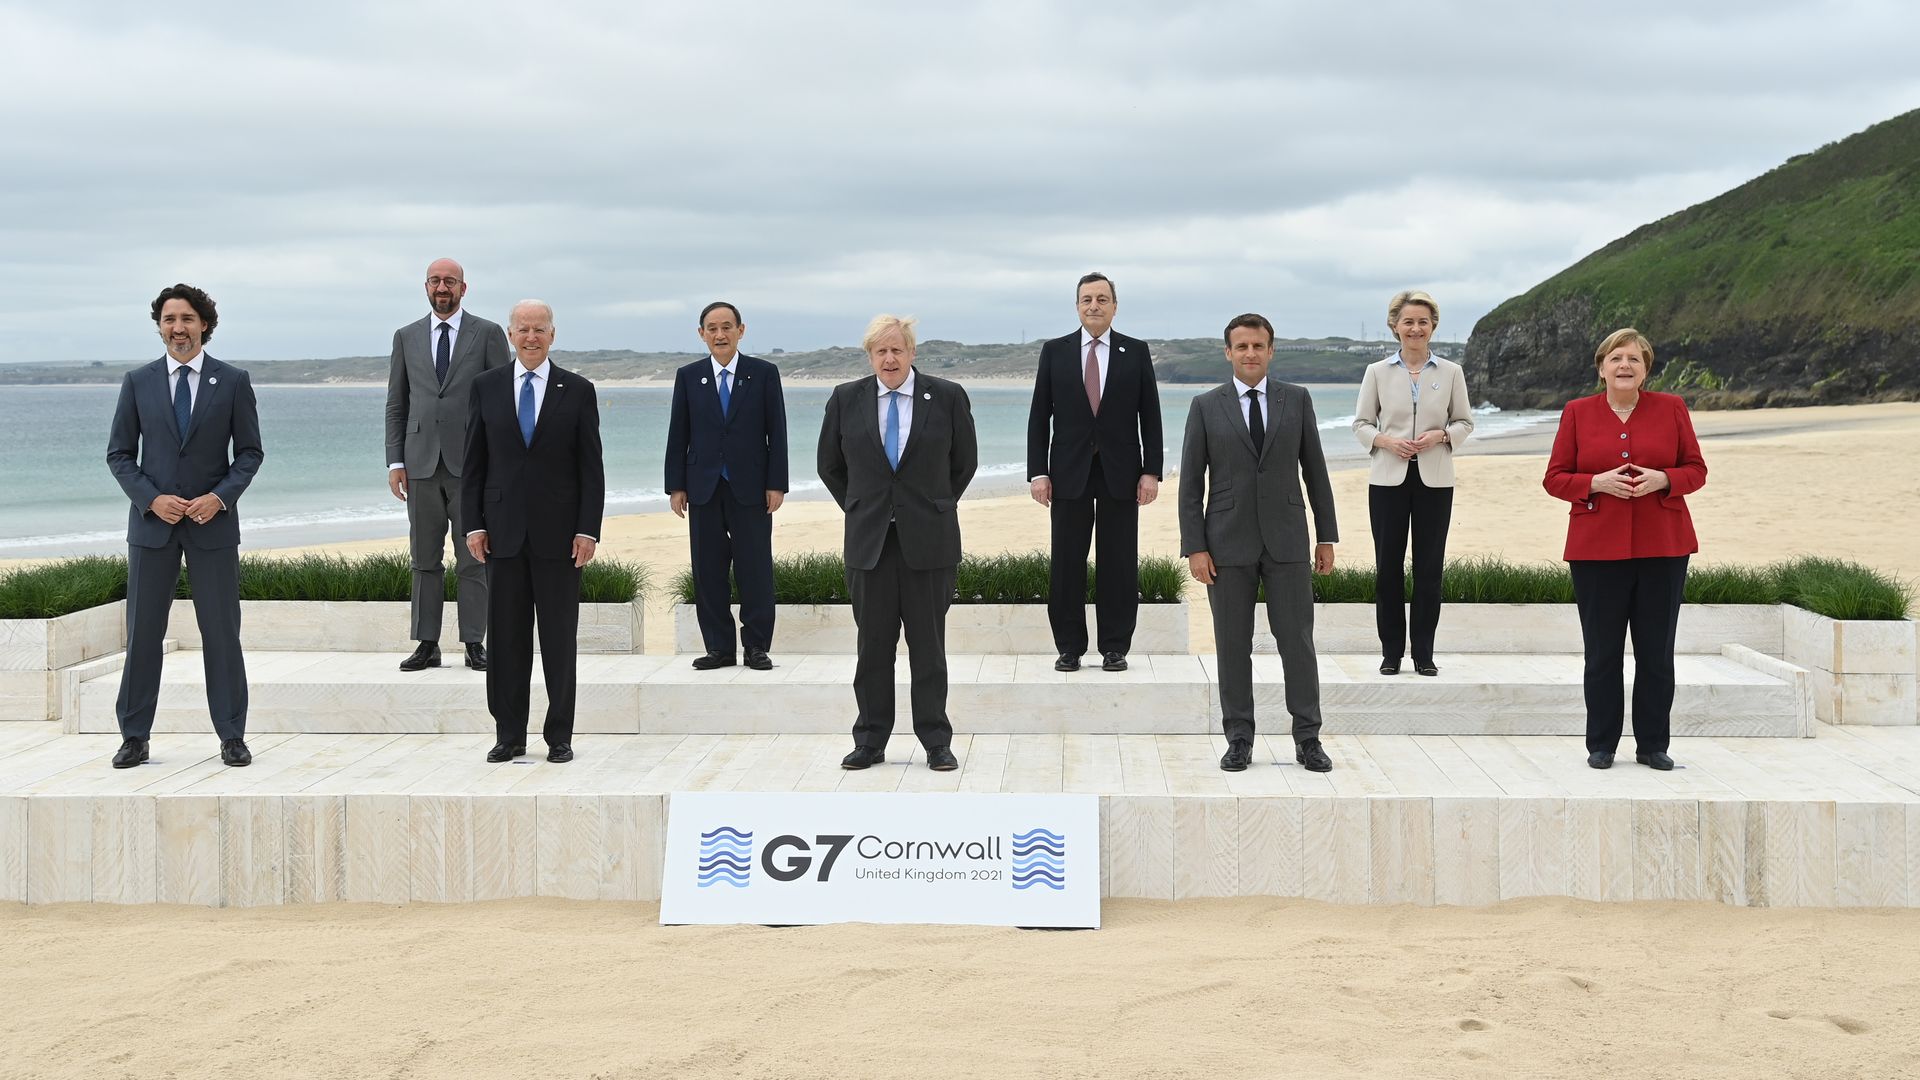 The G7 Leaders summit in Cornwall, United Kingdom.